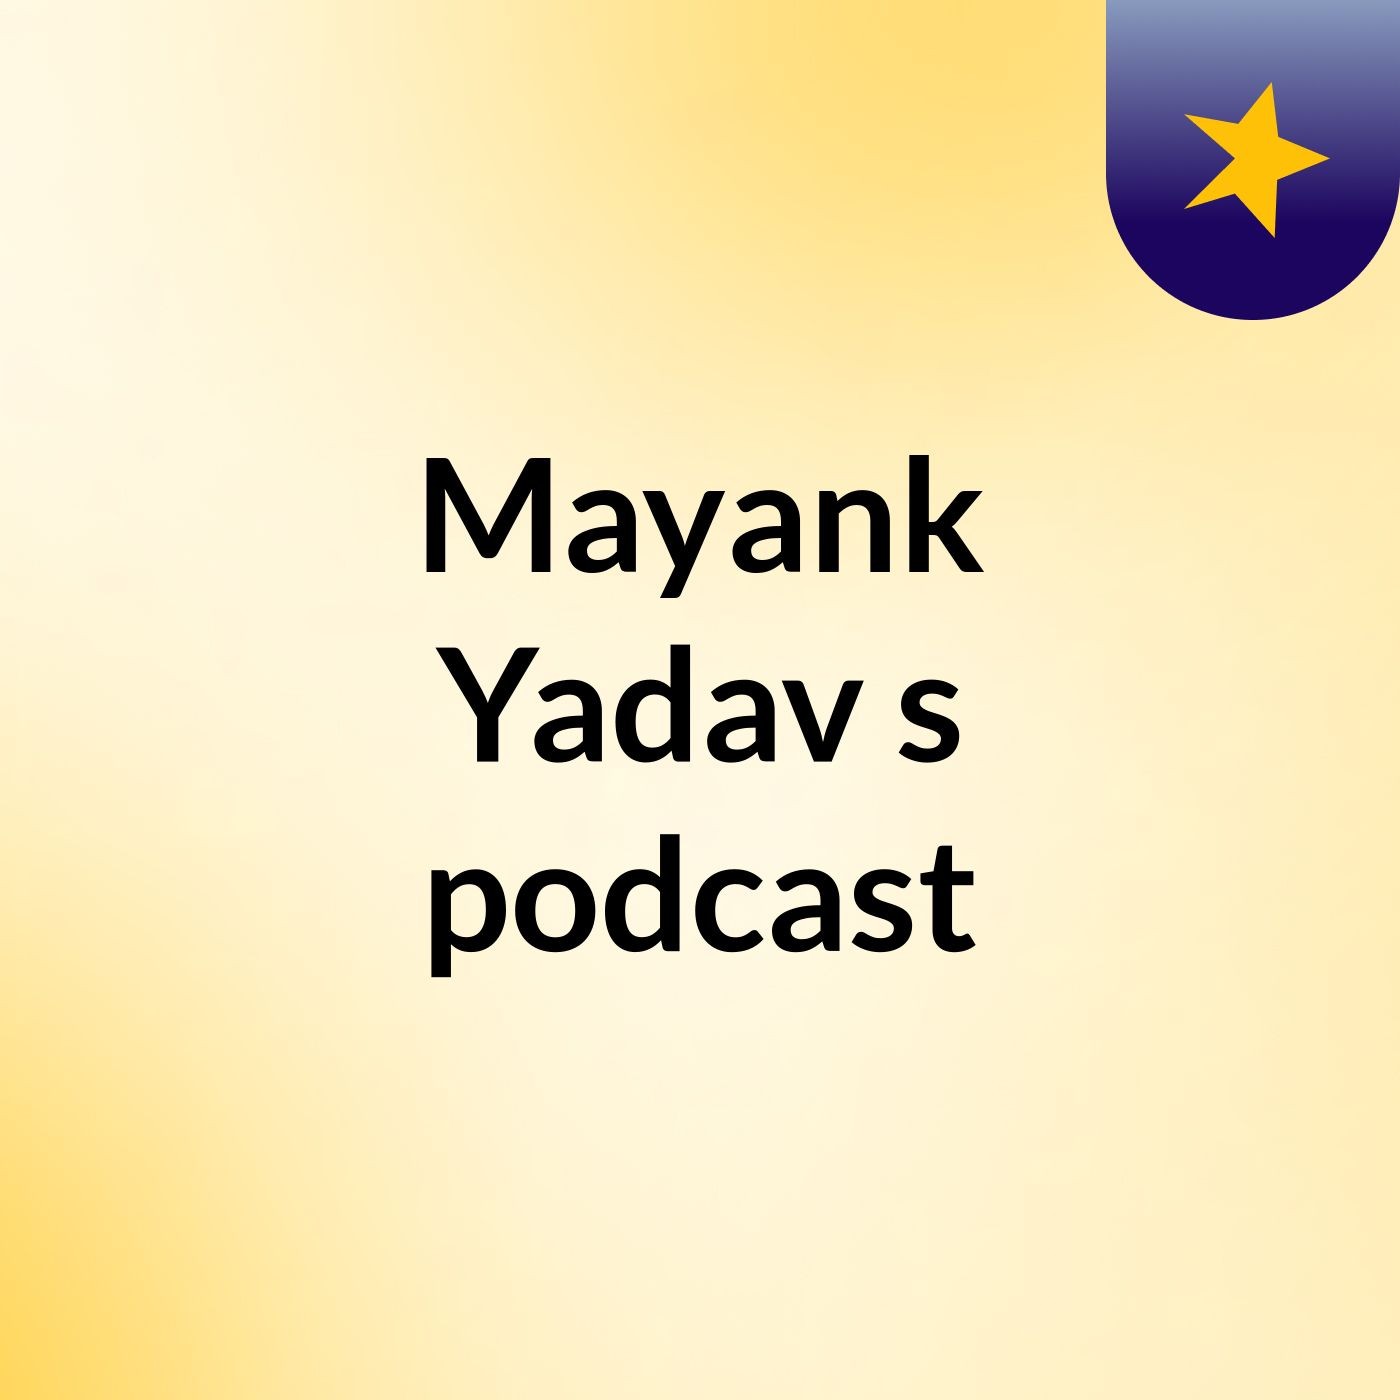 Episode 6 - Mayank Yadav's podcast